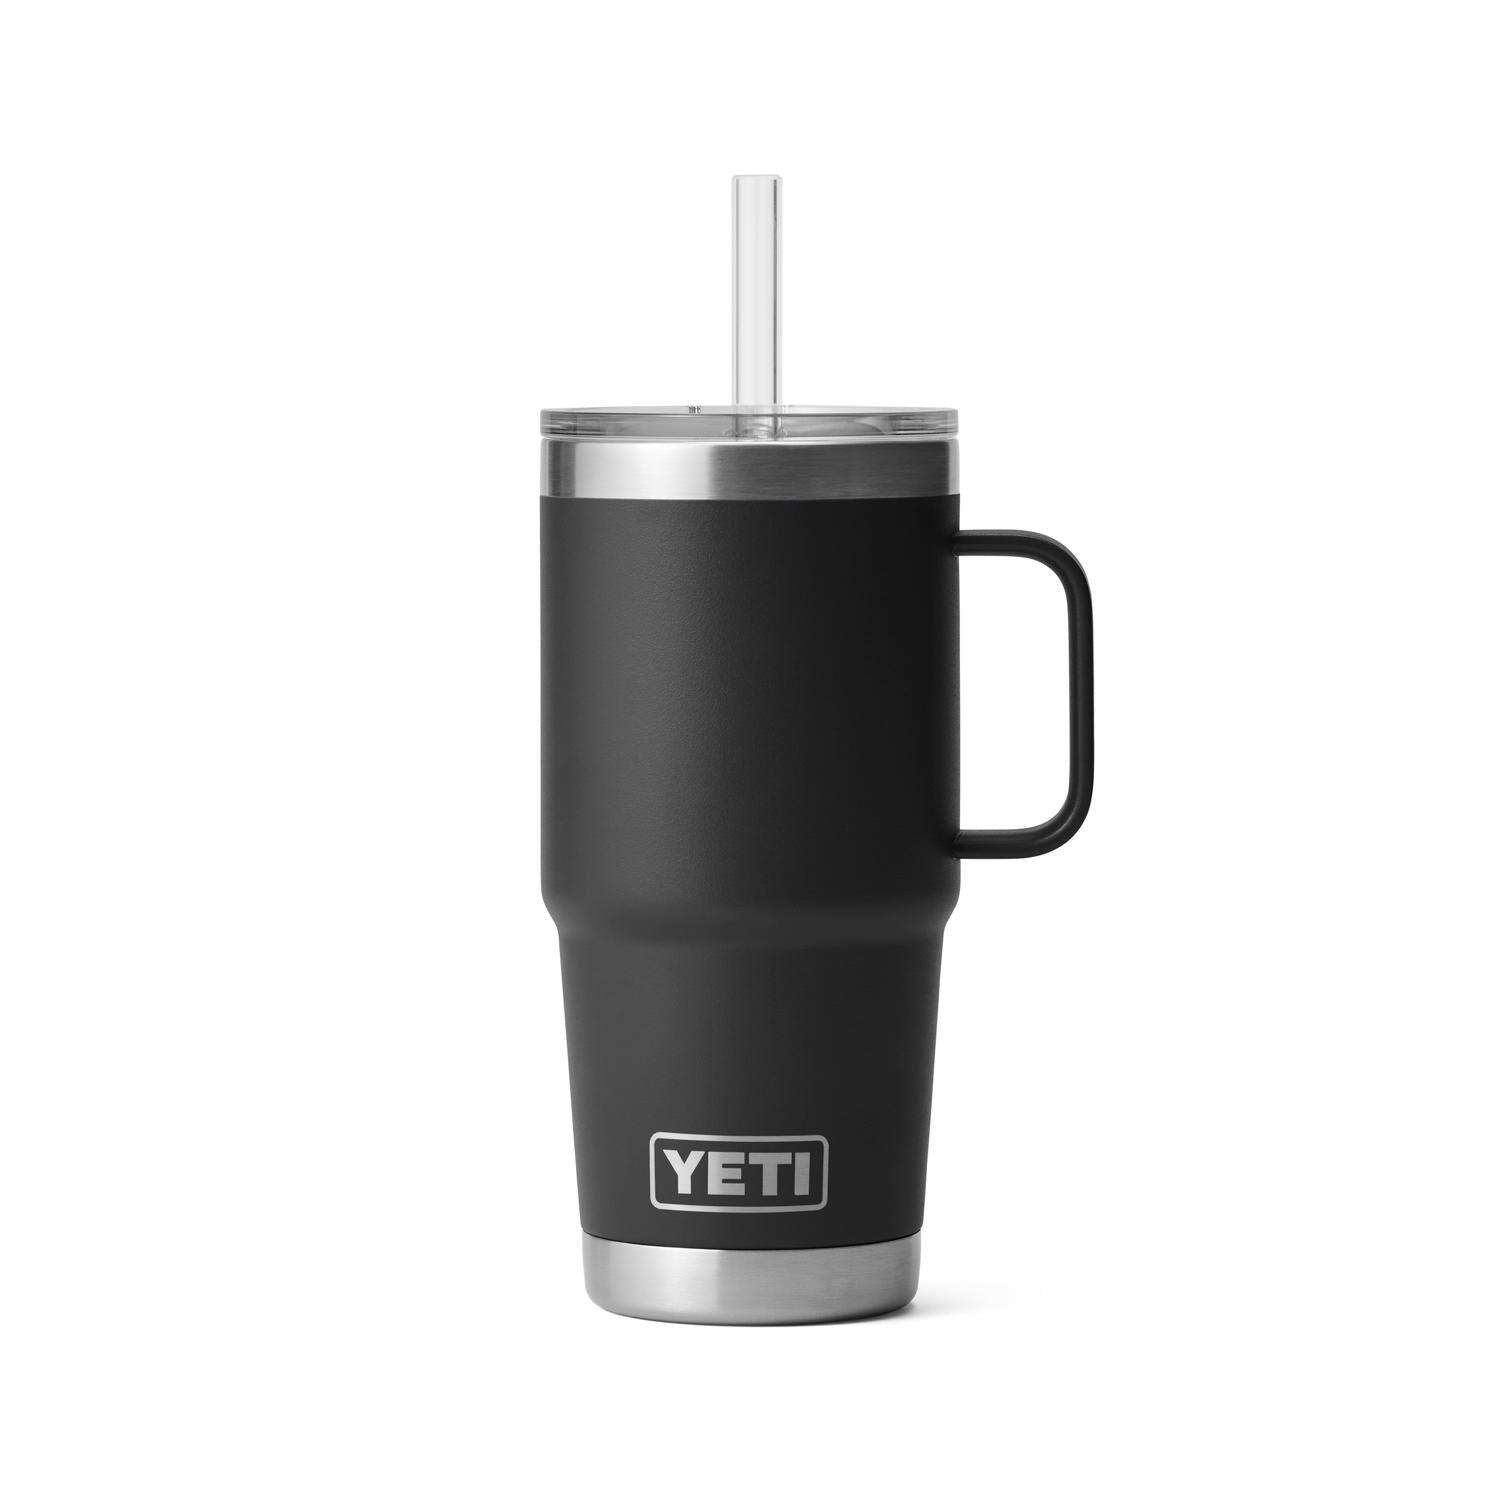 Yeti Rambler Mug with Lid